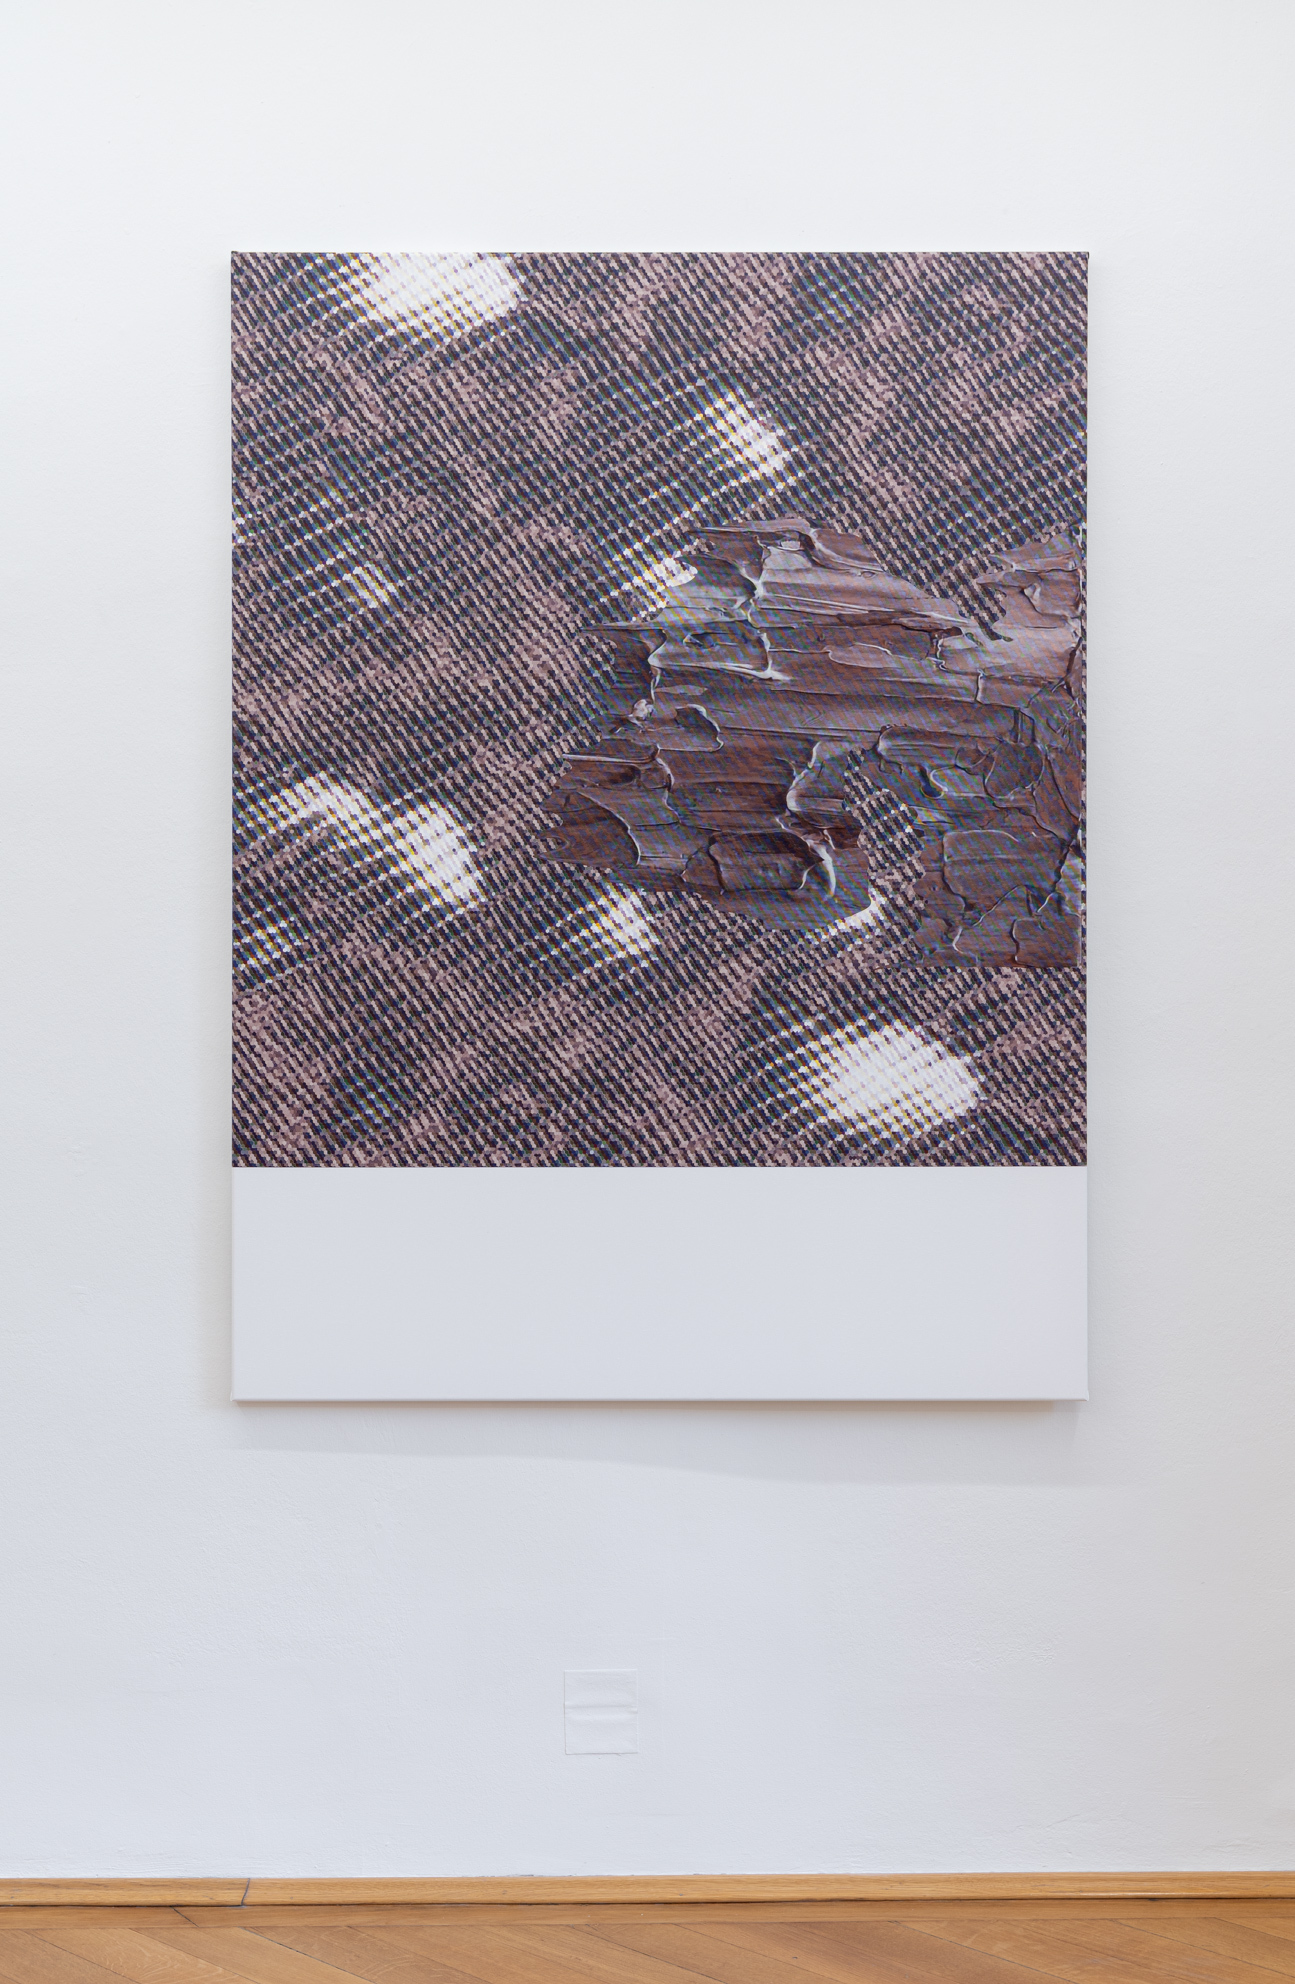 Taslima Ahmed, "Reconstructor Painting (canvas automata)", 2022, UV print on canvas, 153 x 114 cm